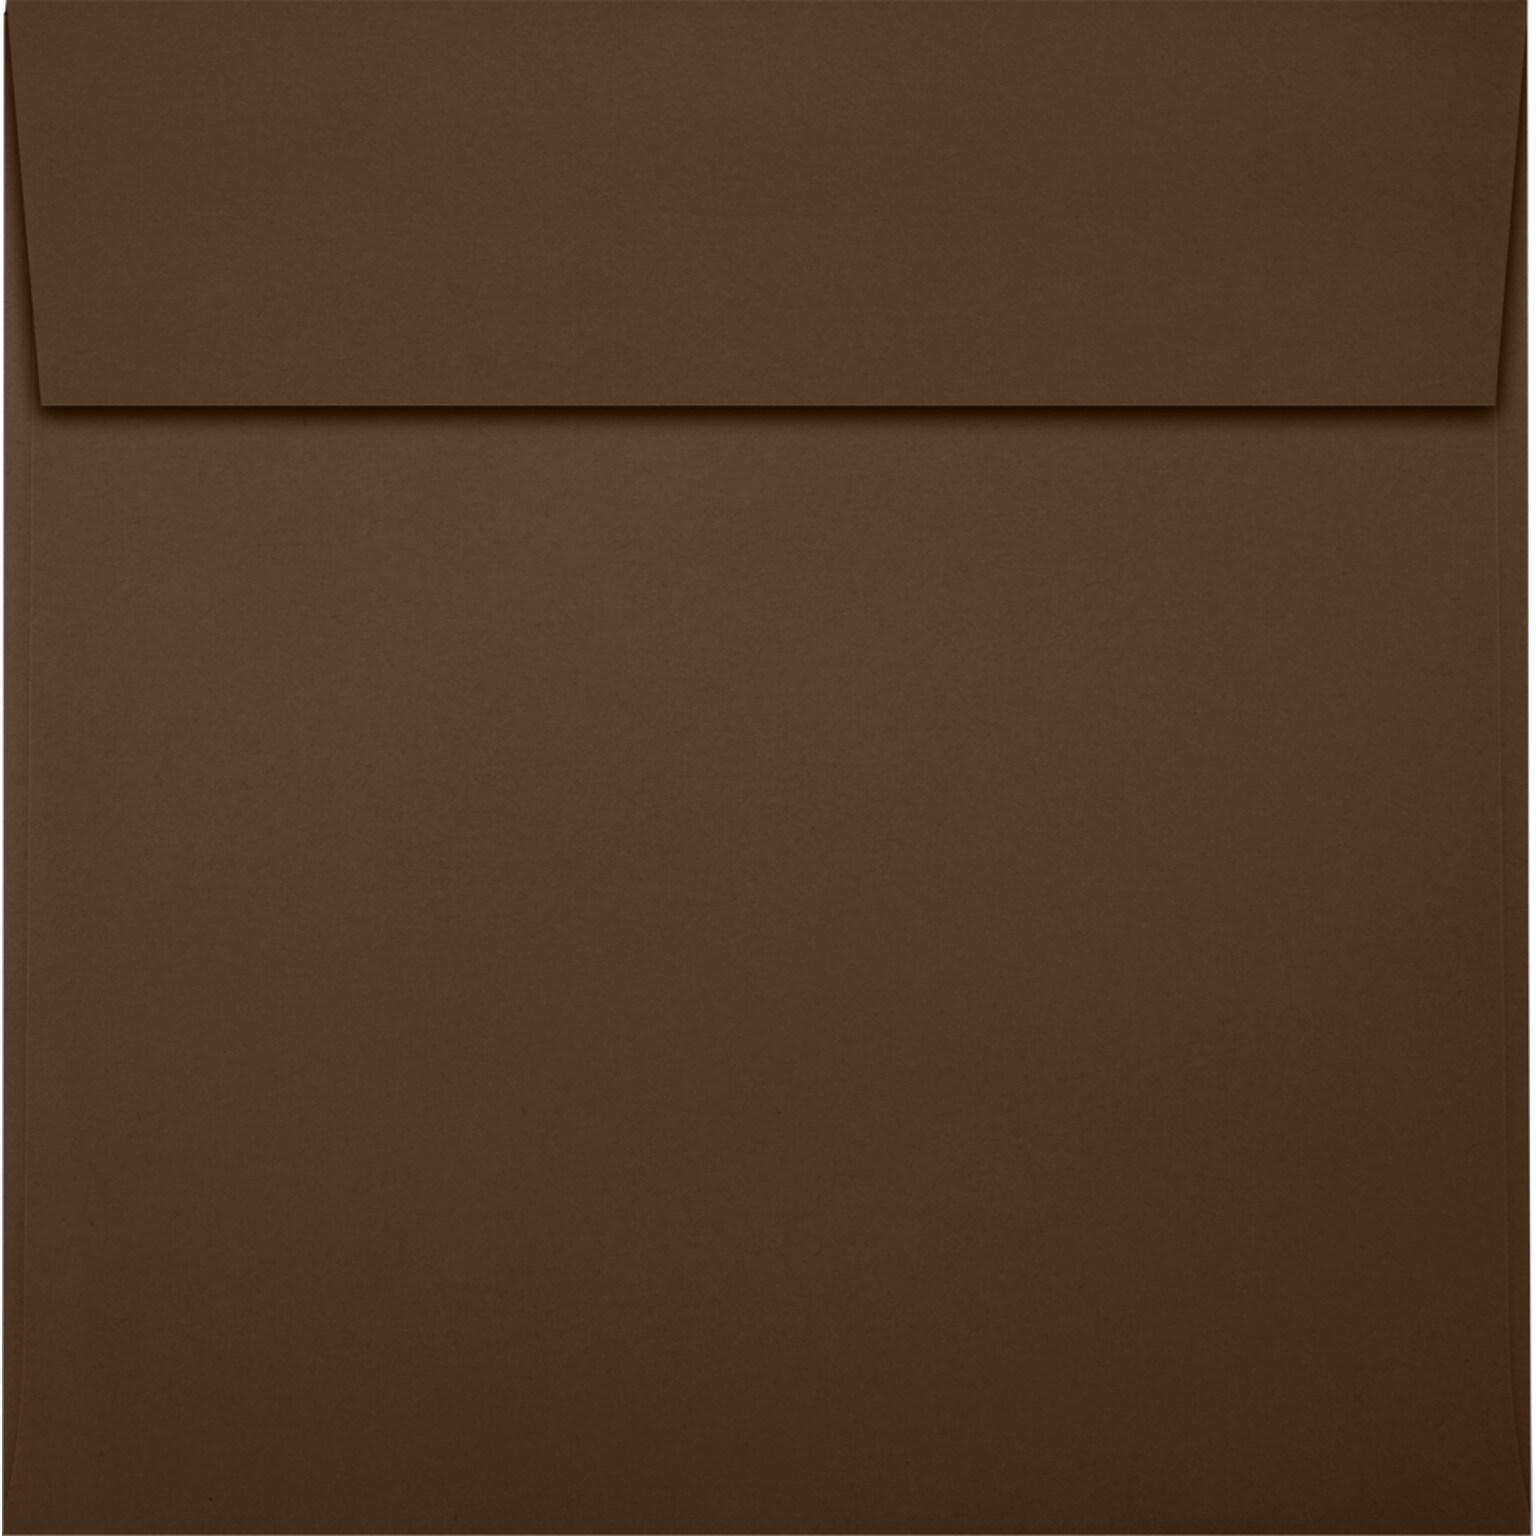 JAM Paper Square Envelopes, Peel & Press, Chocolate, 6 x 6, 500 Pack (8525-25-500)